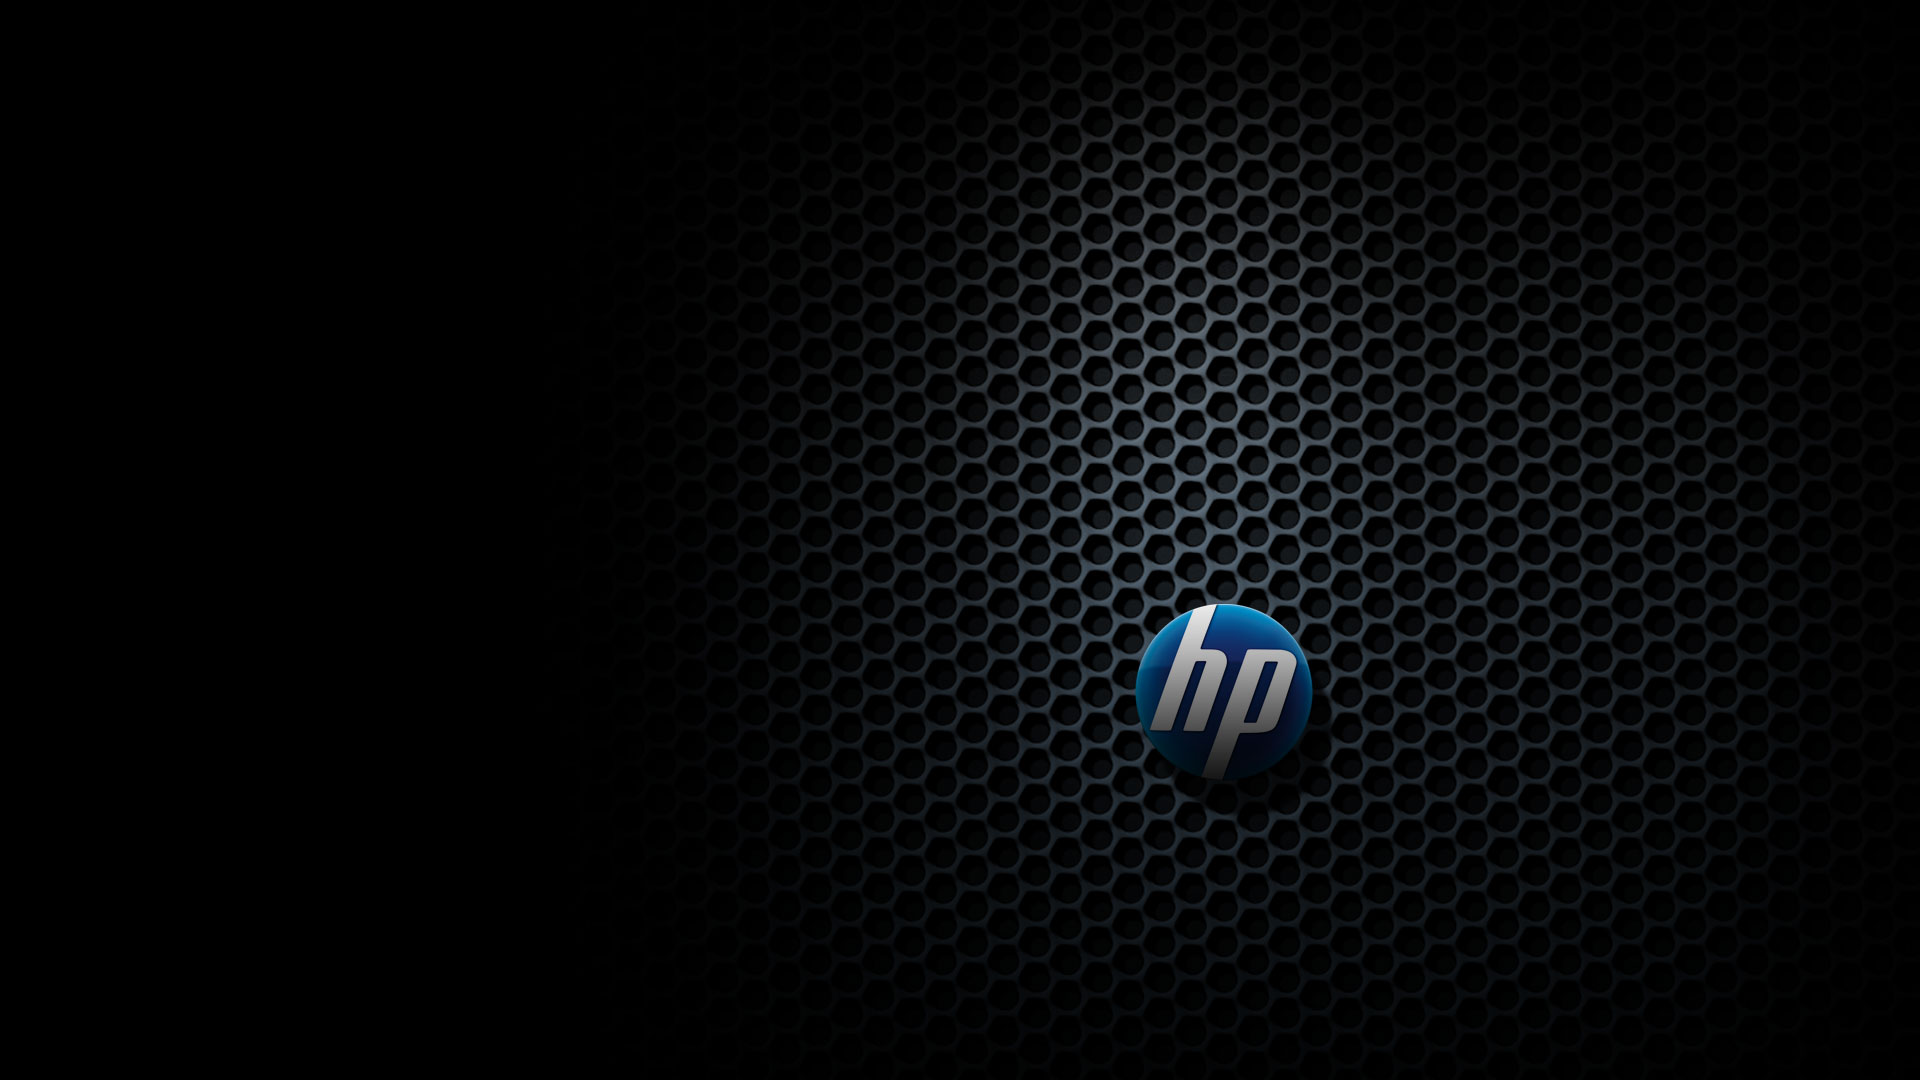 Hp Desktop Wallpaper HD 1080p Background For